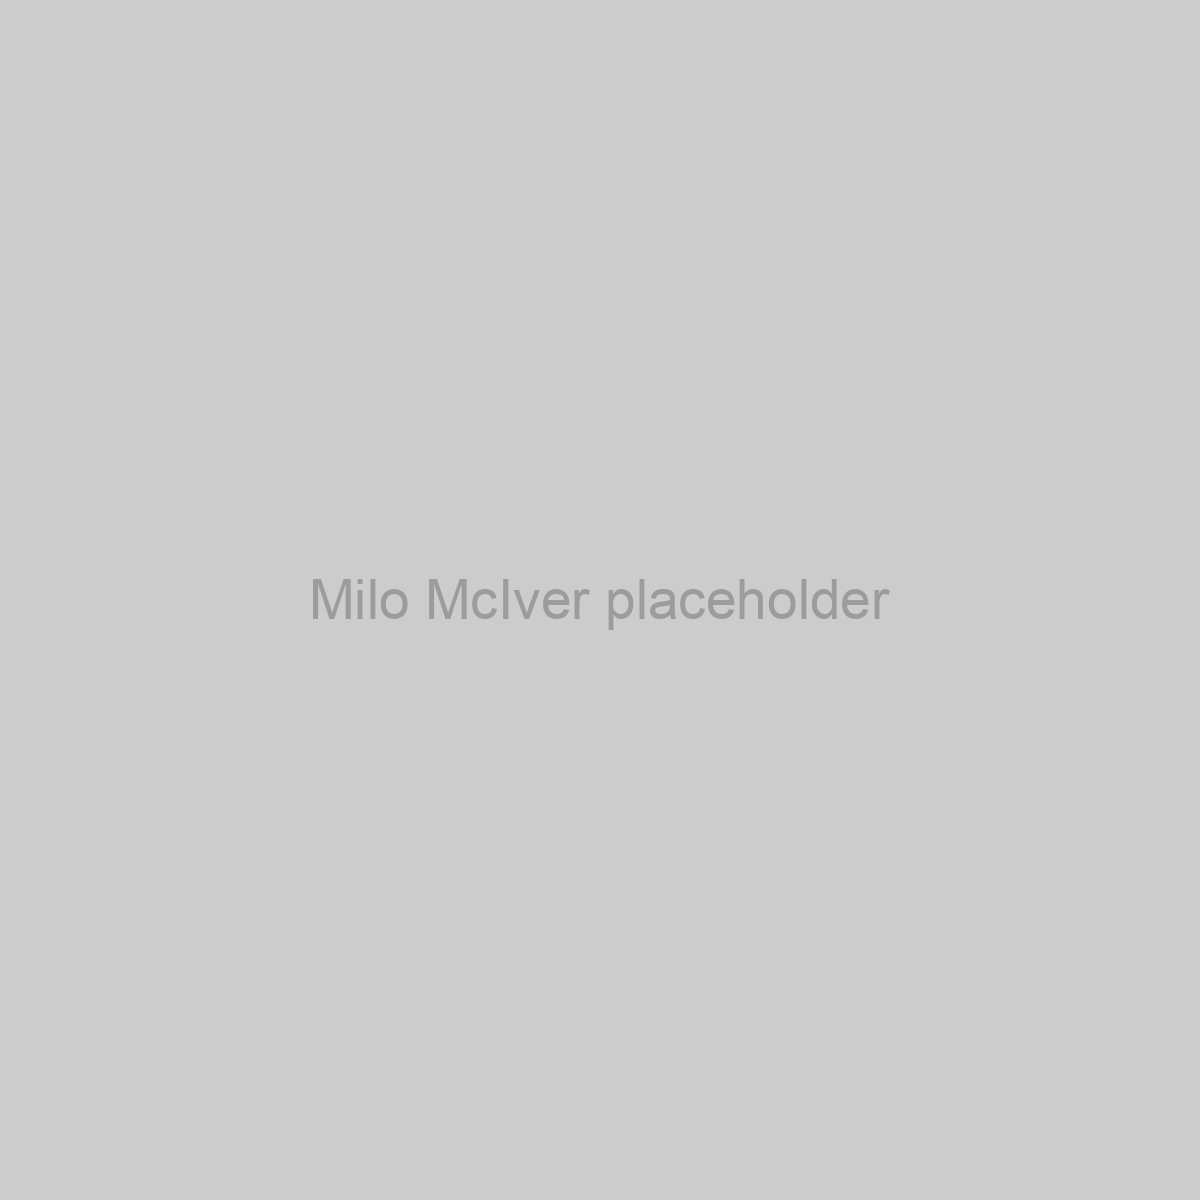 Milo McIver Placeholder Image